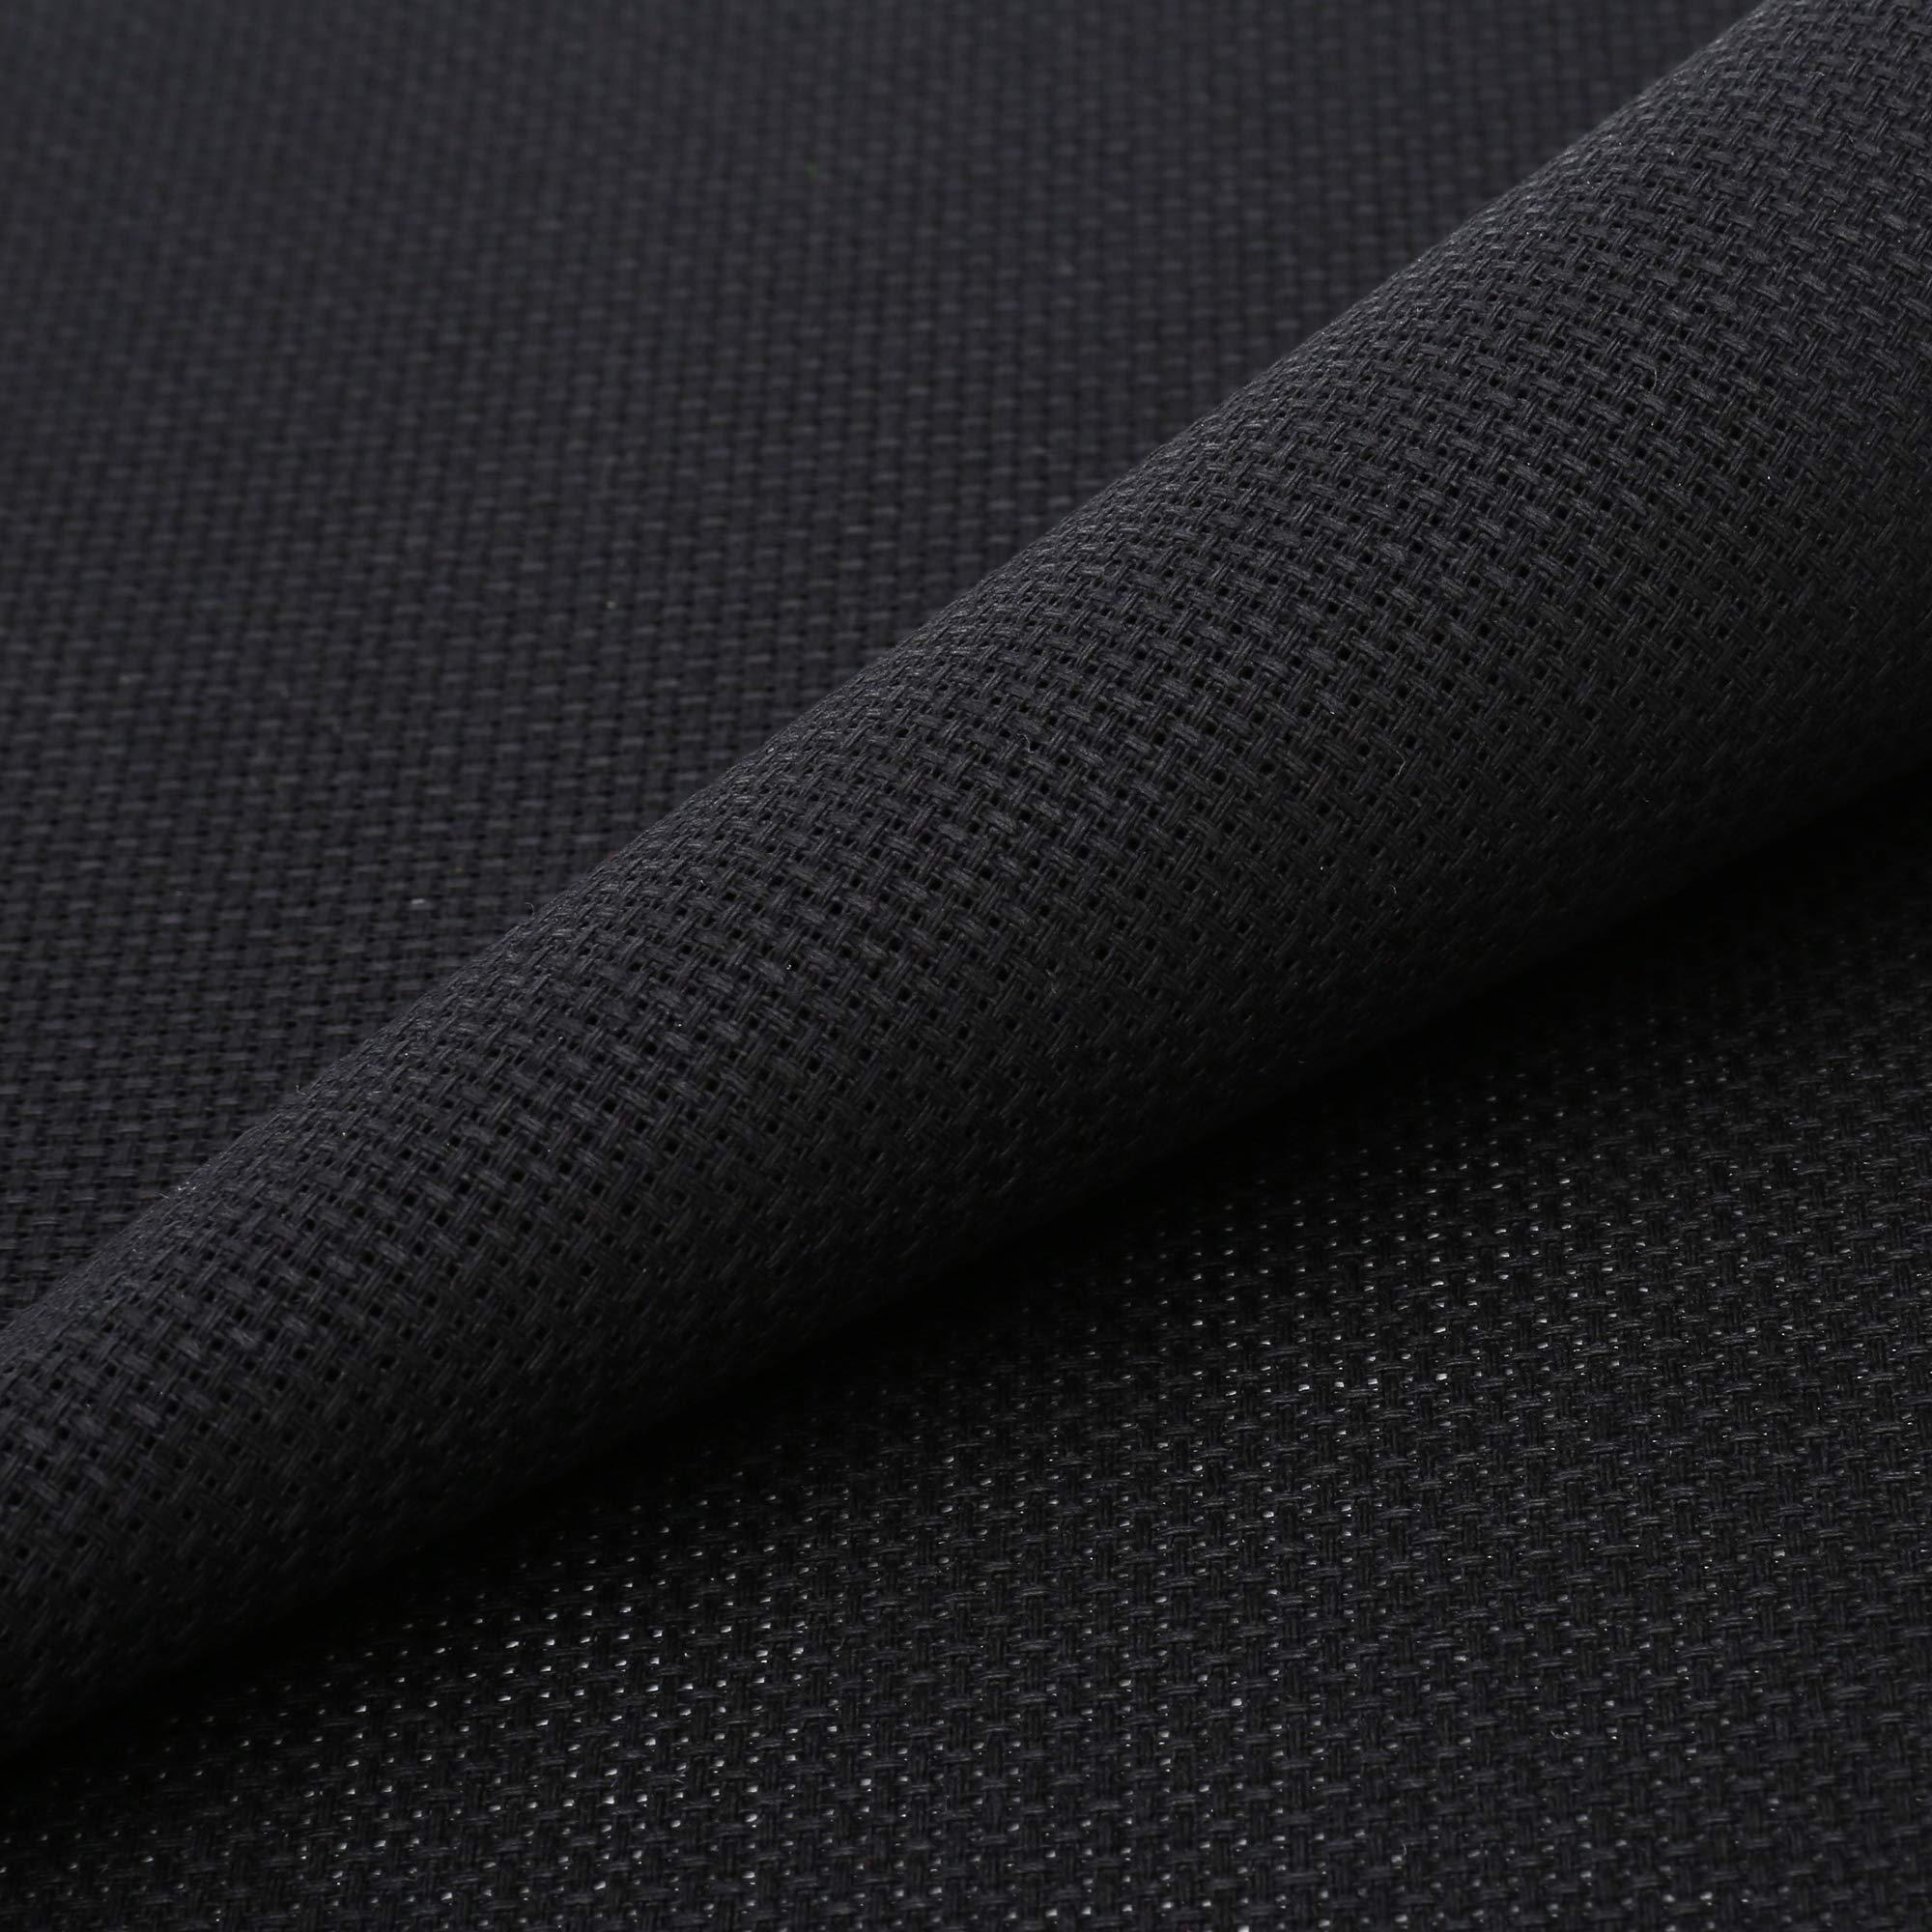 DONMON aida cloth 14 count cross stitch fabric,1928inch (14ct, black)